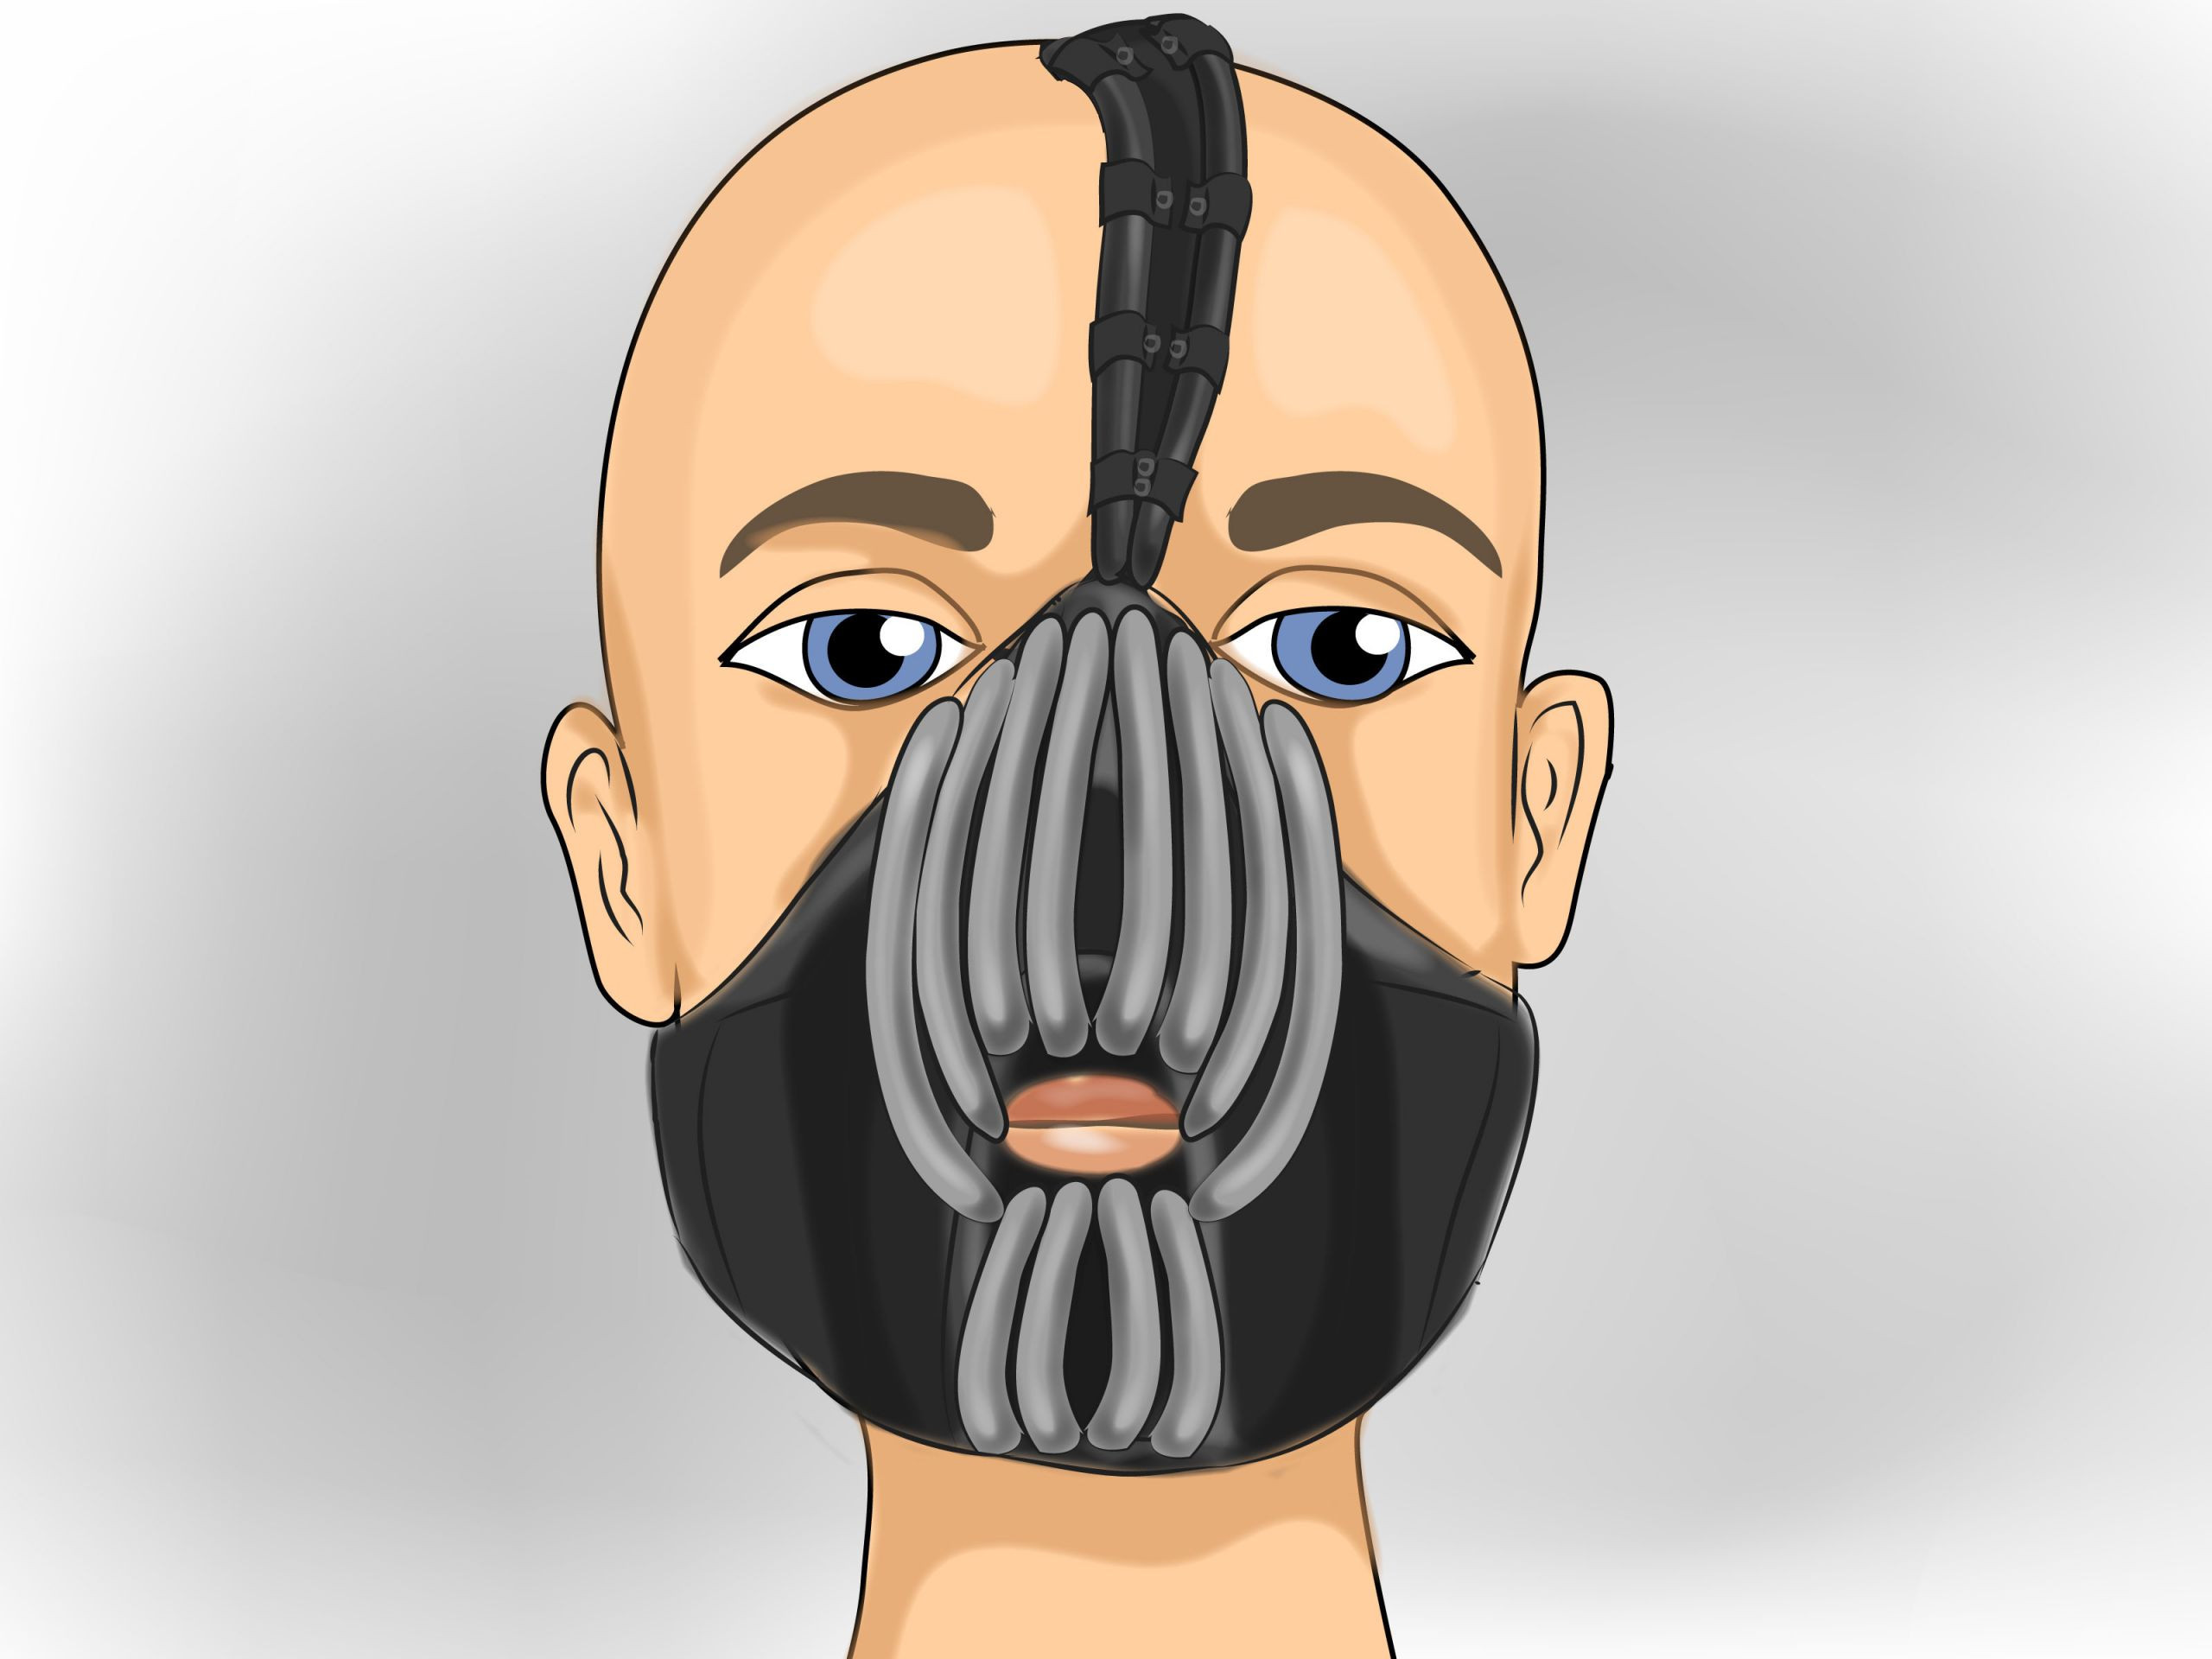 DIY Bane Mask
 Top 23 Diy Bane Mask Home Family Style and Art Ideas